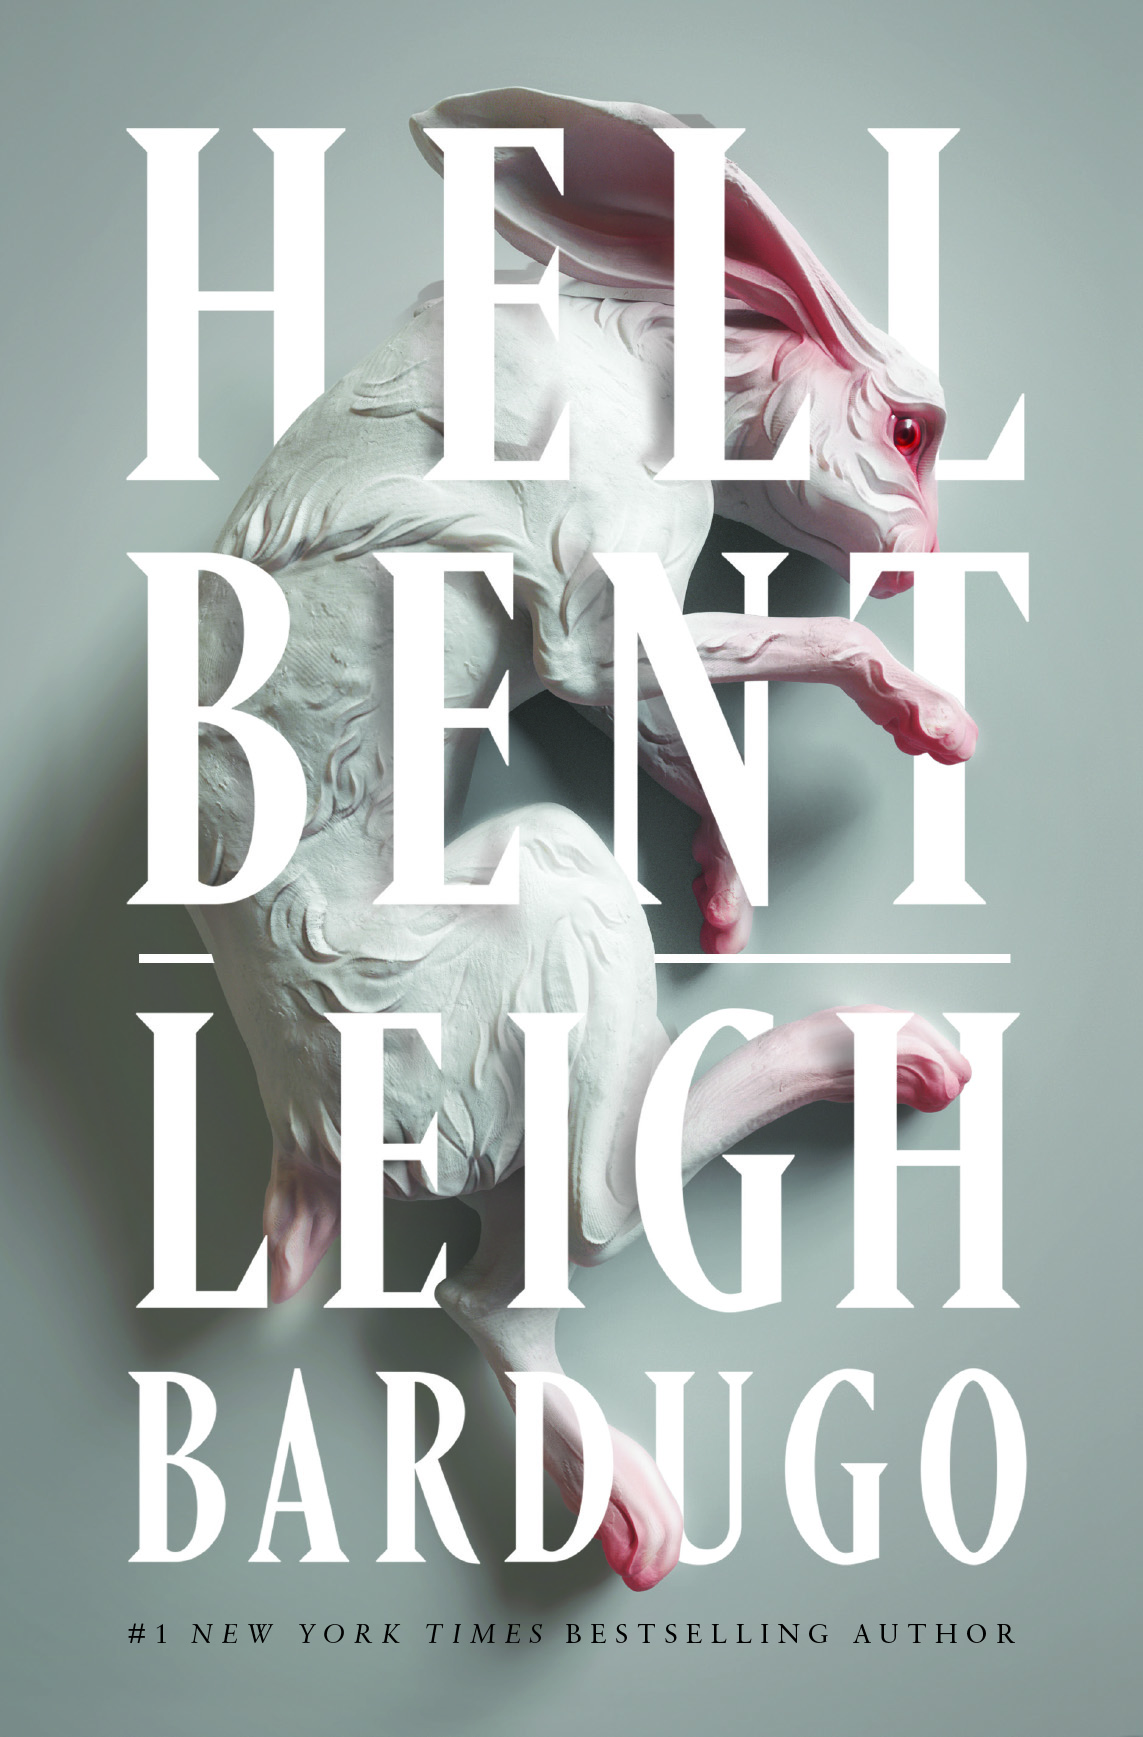 leigh bardugo hell bent book tour